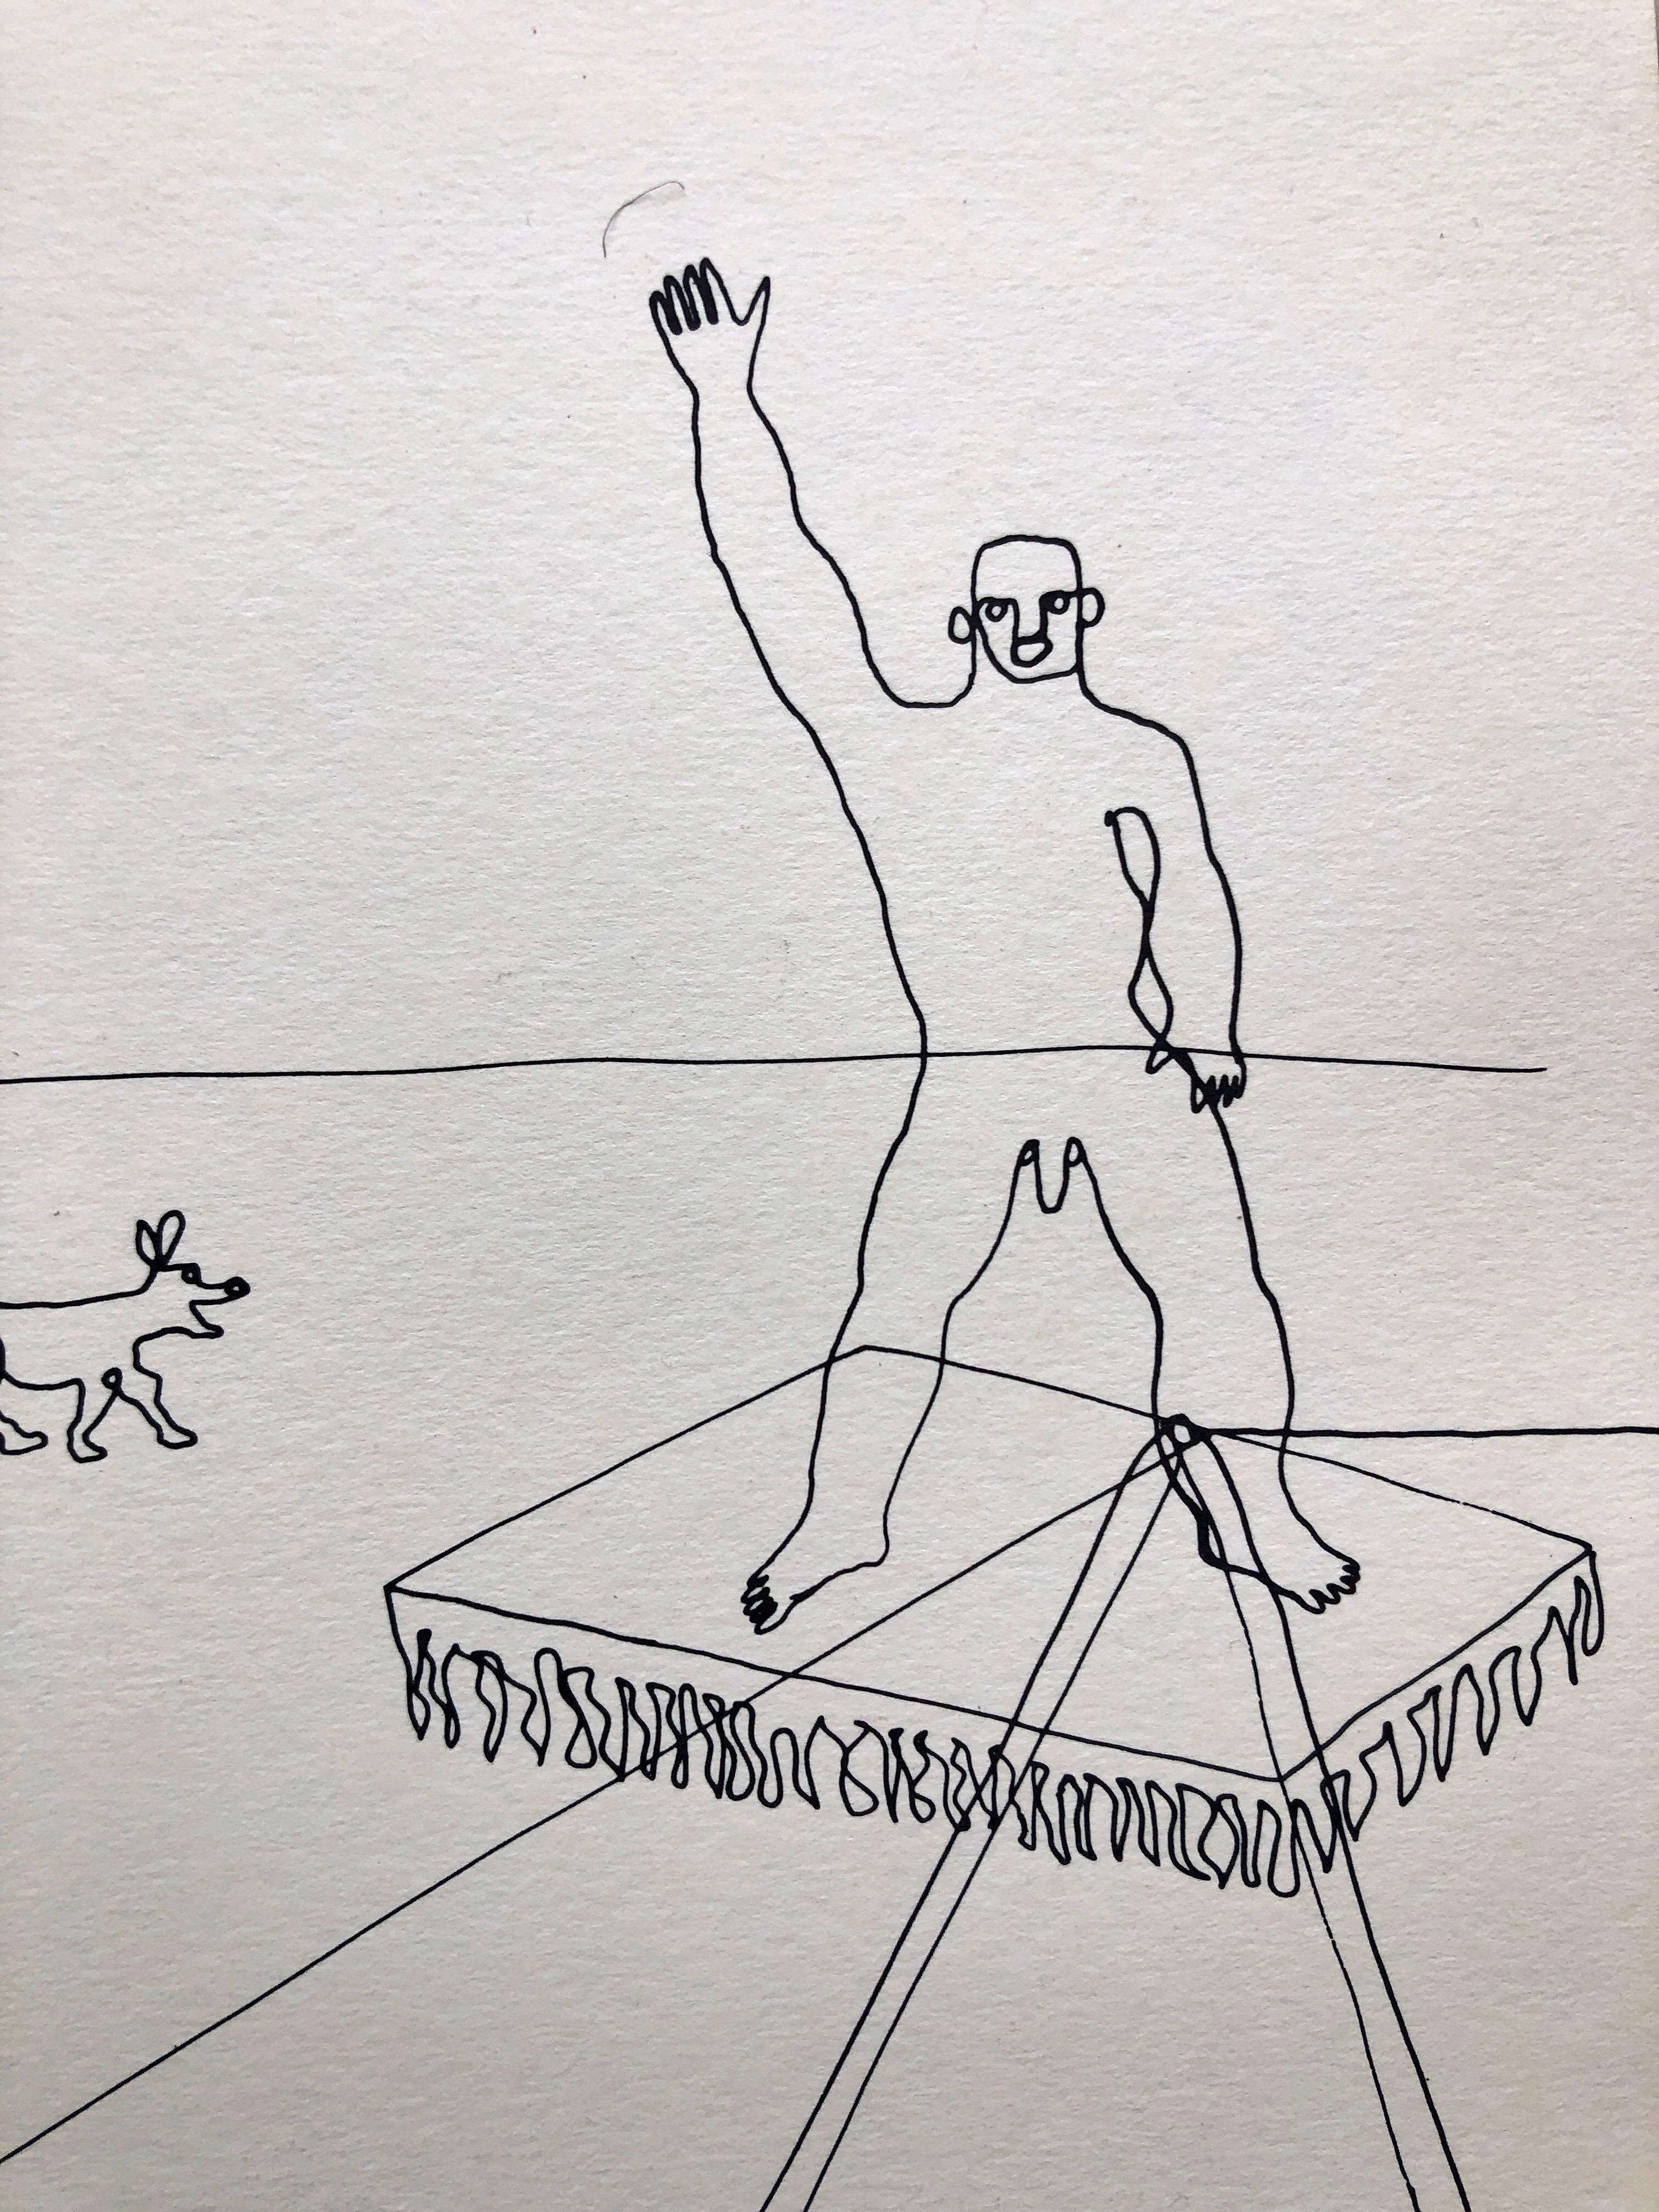 Lithographie de reproduction de cirque d'après un dessin d'Alexander Calder - Print de (after) Alexander Calder